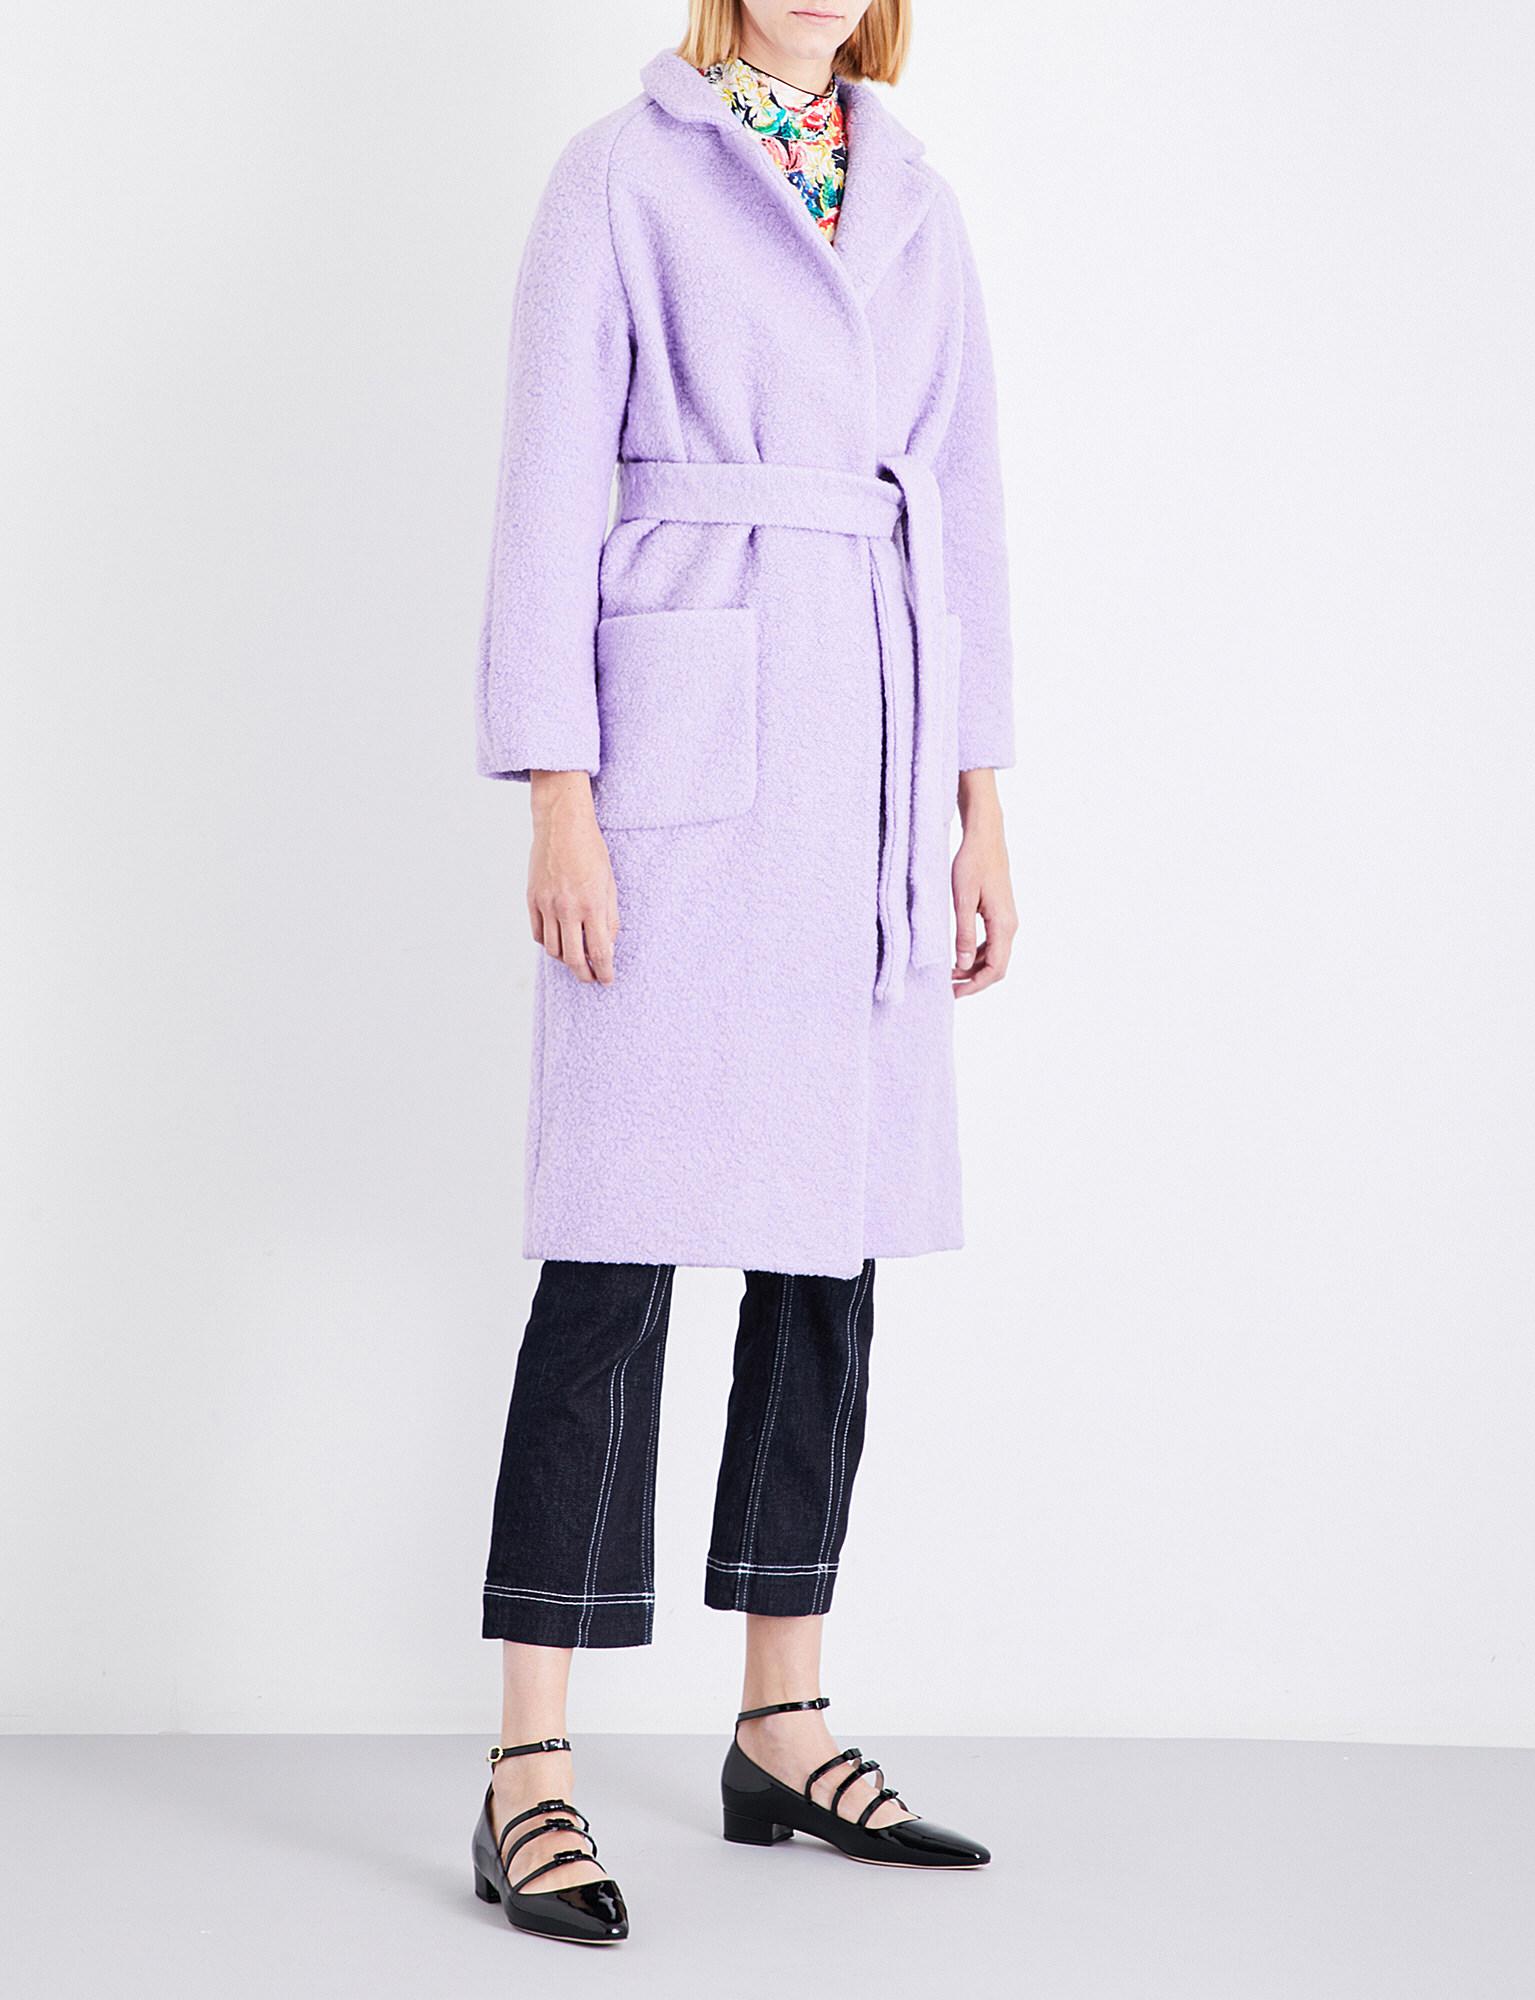 Ganni Purple Coat Hot Sale, UP TO 65% OFF | www.weworkfactory.com